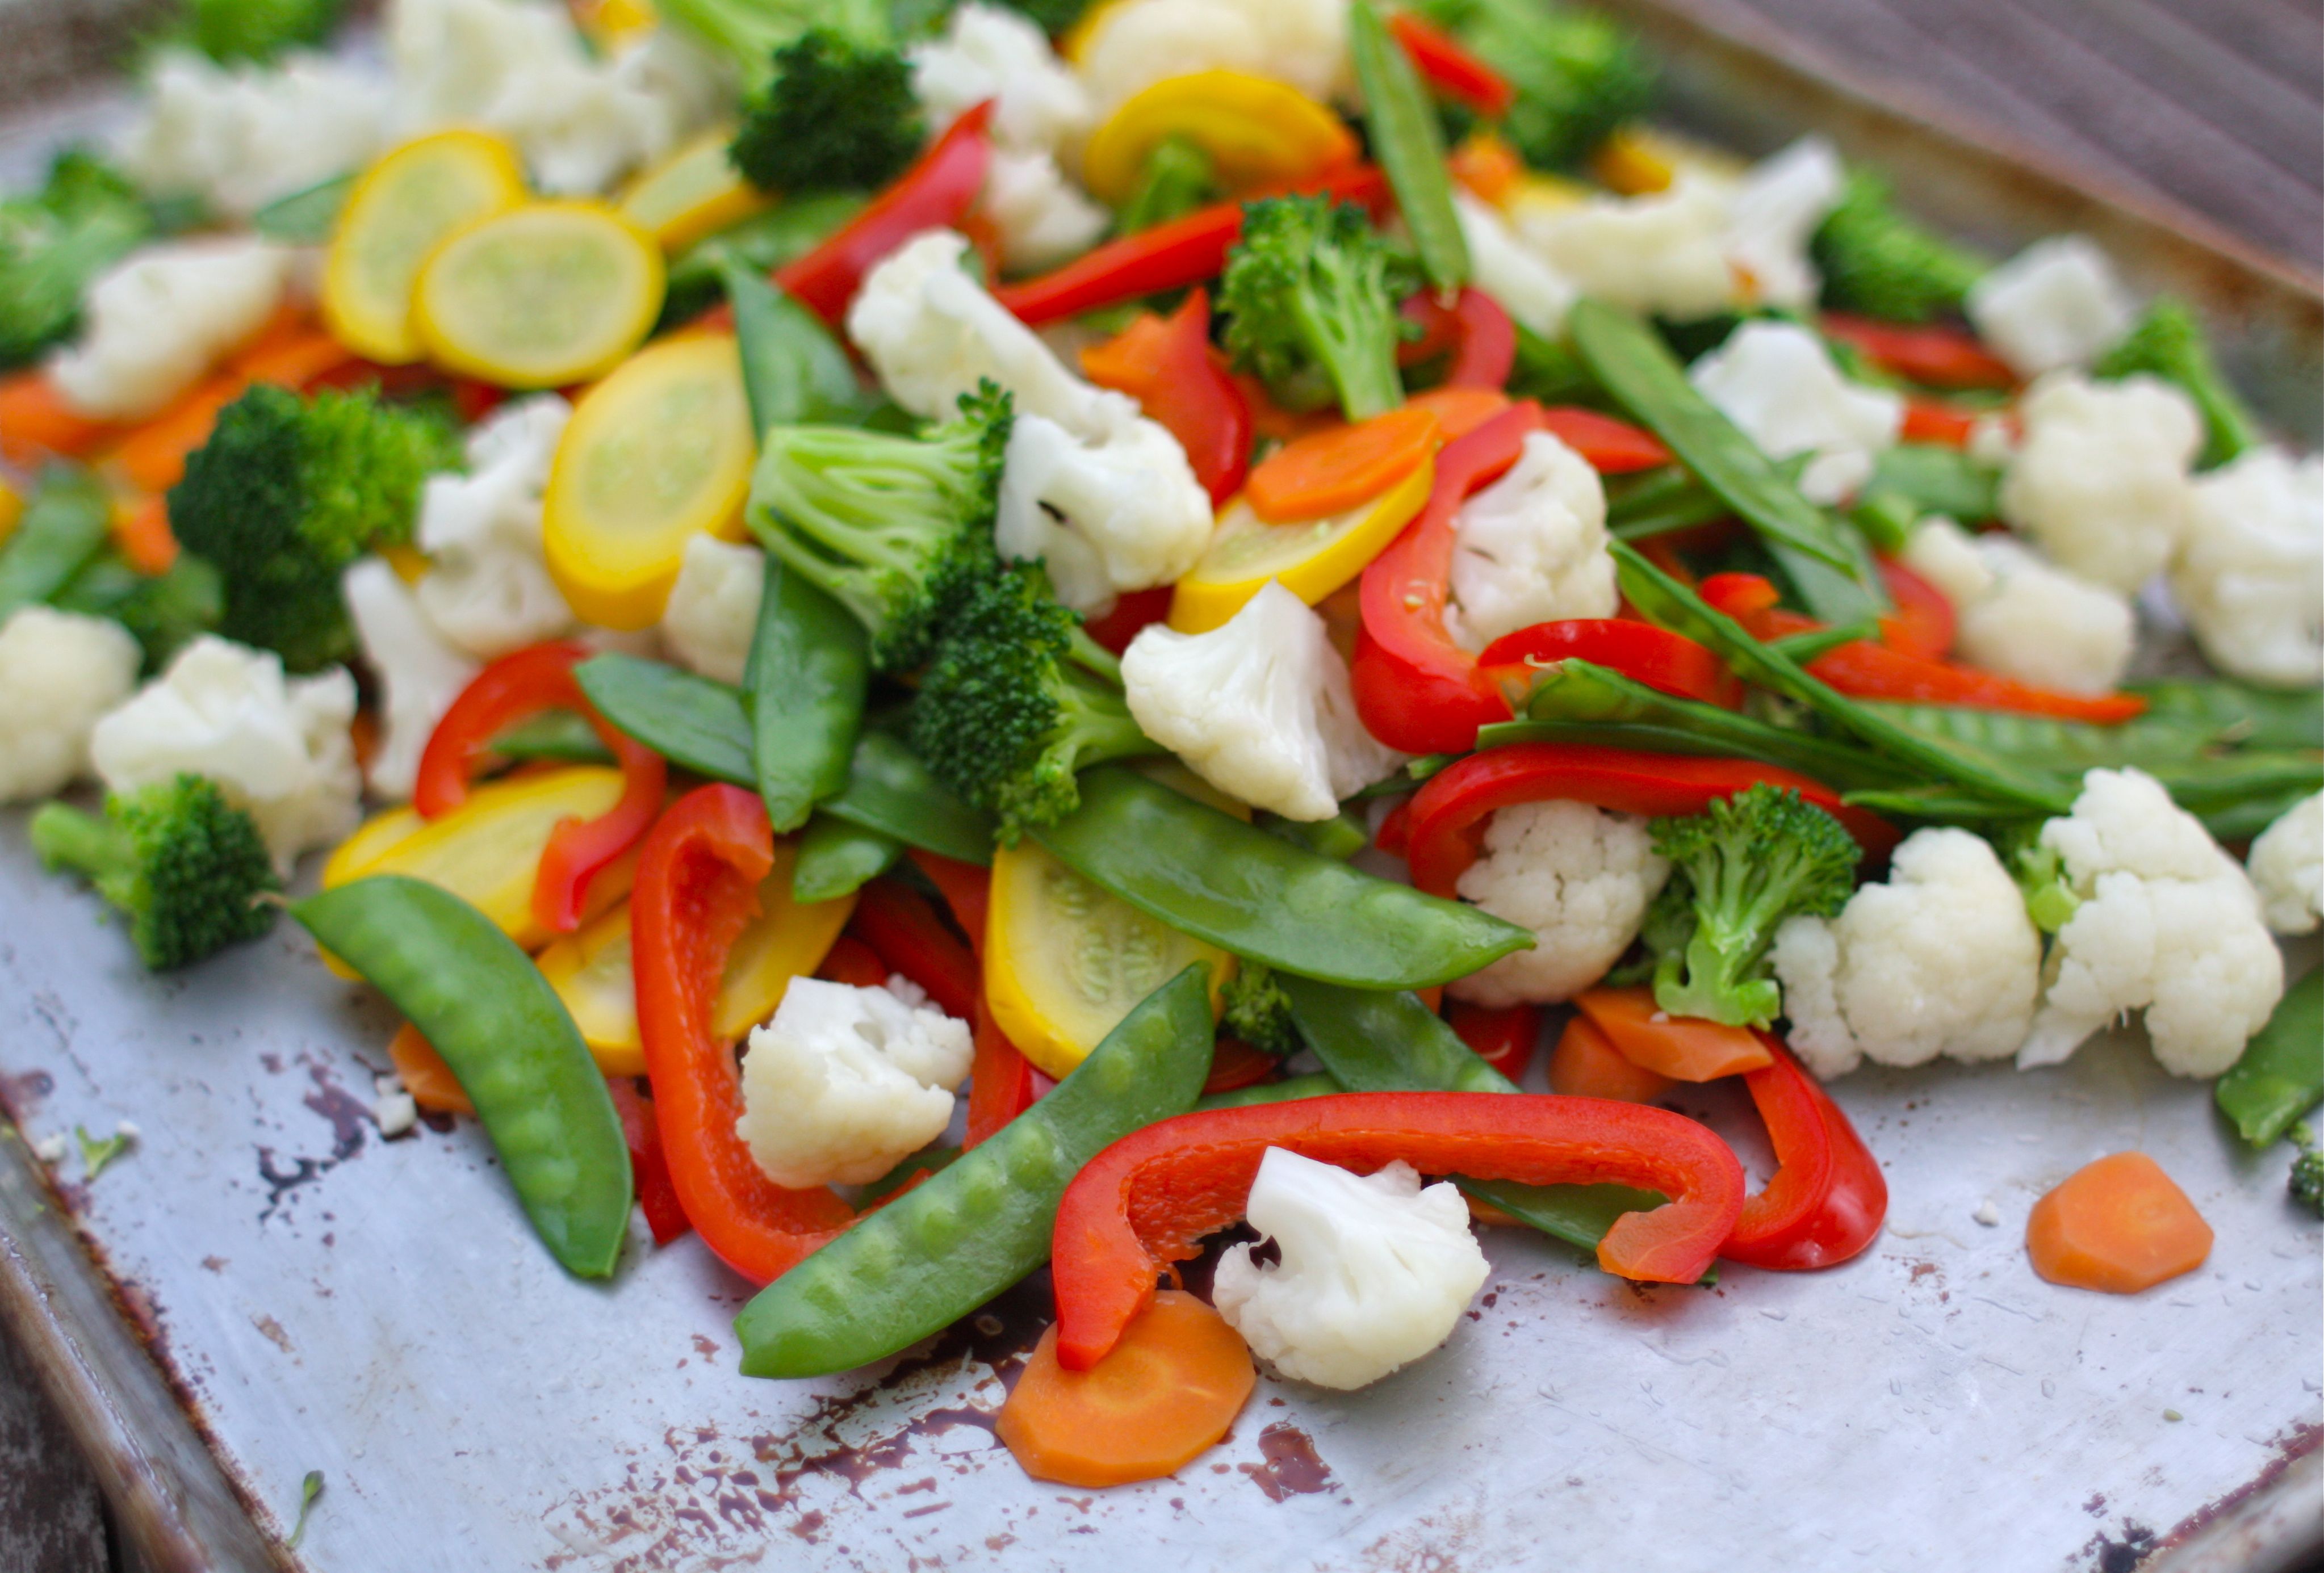 DIY: Stir-fry Vegetable Freezer Packages | Simple Bites